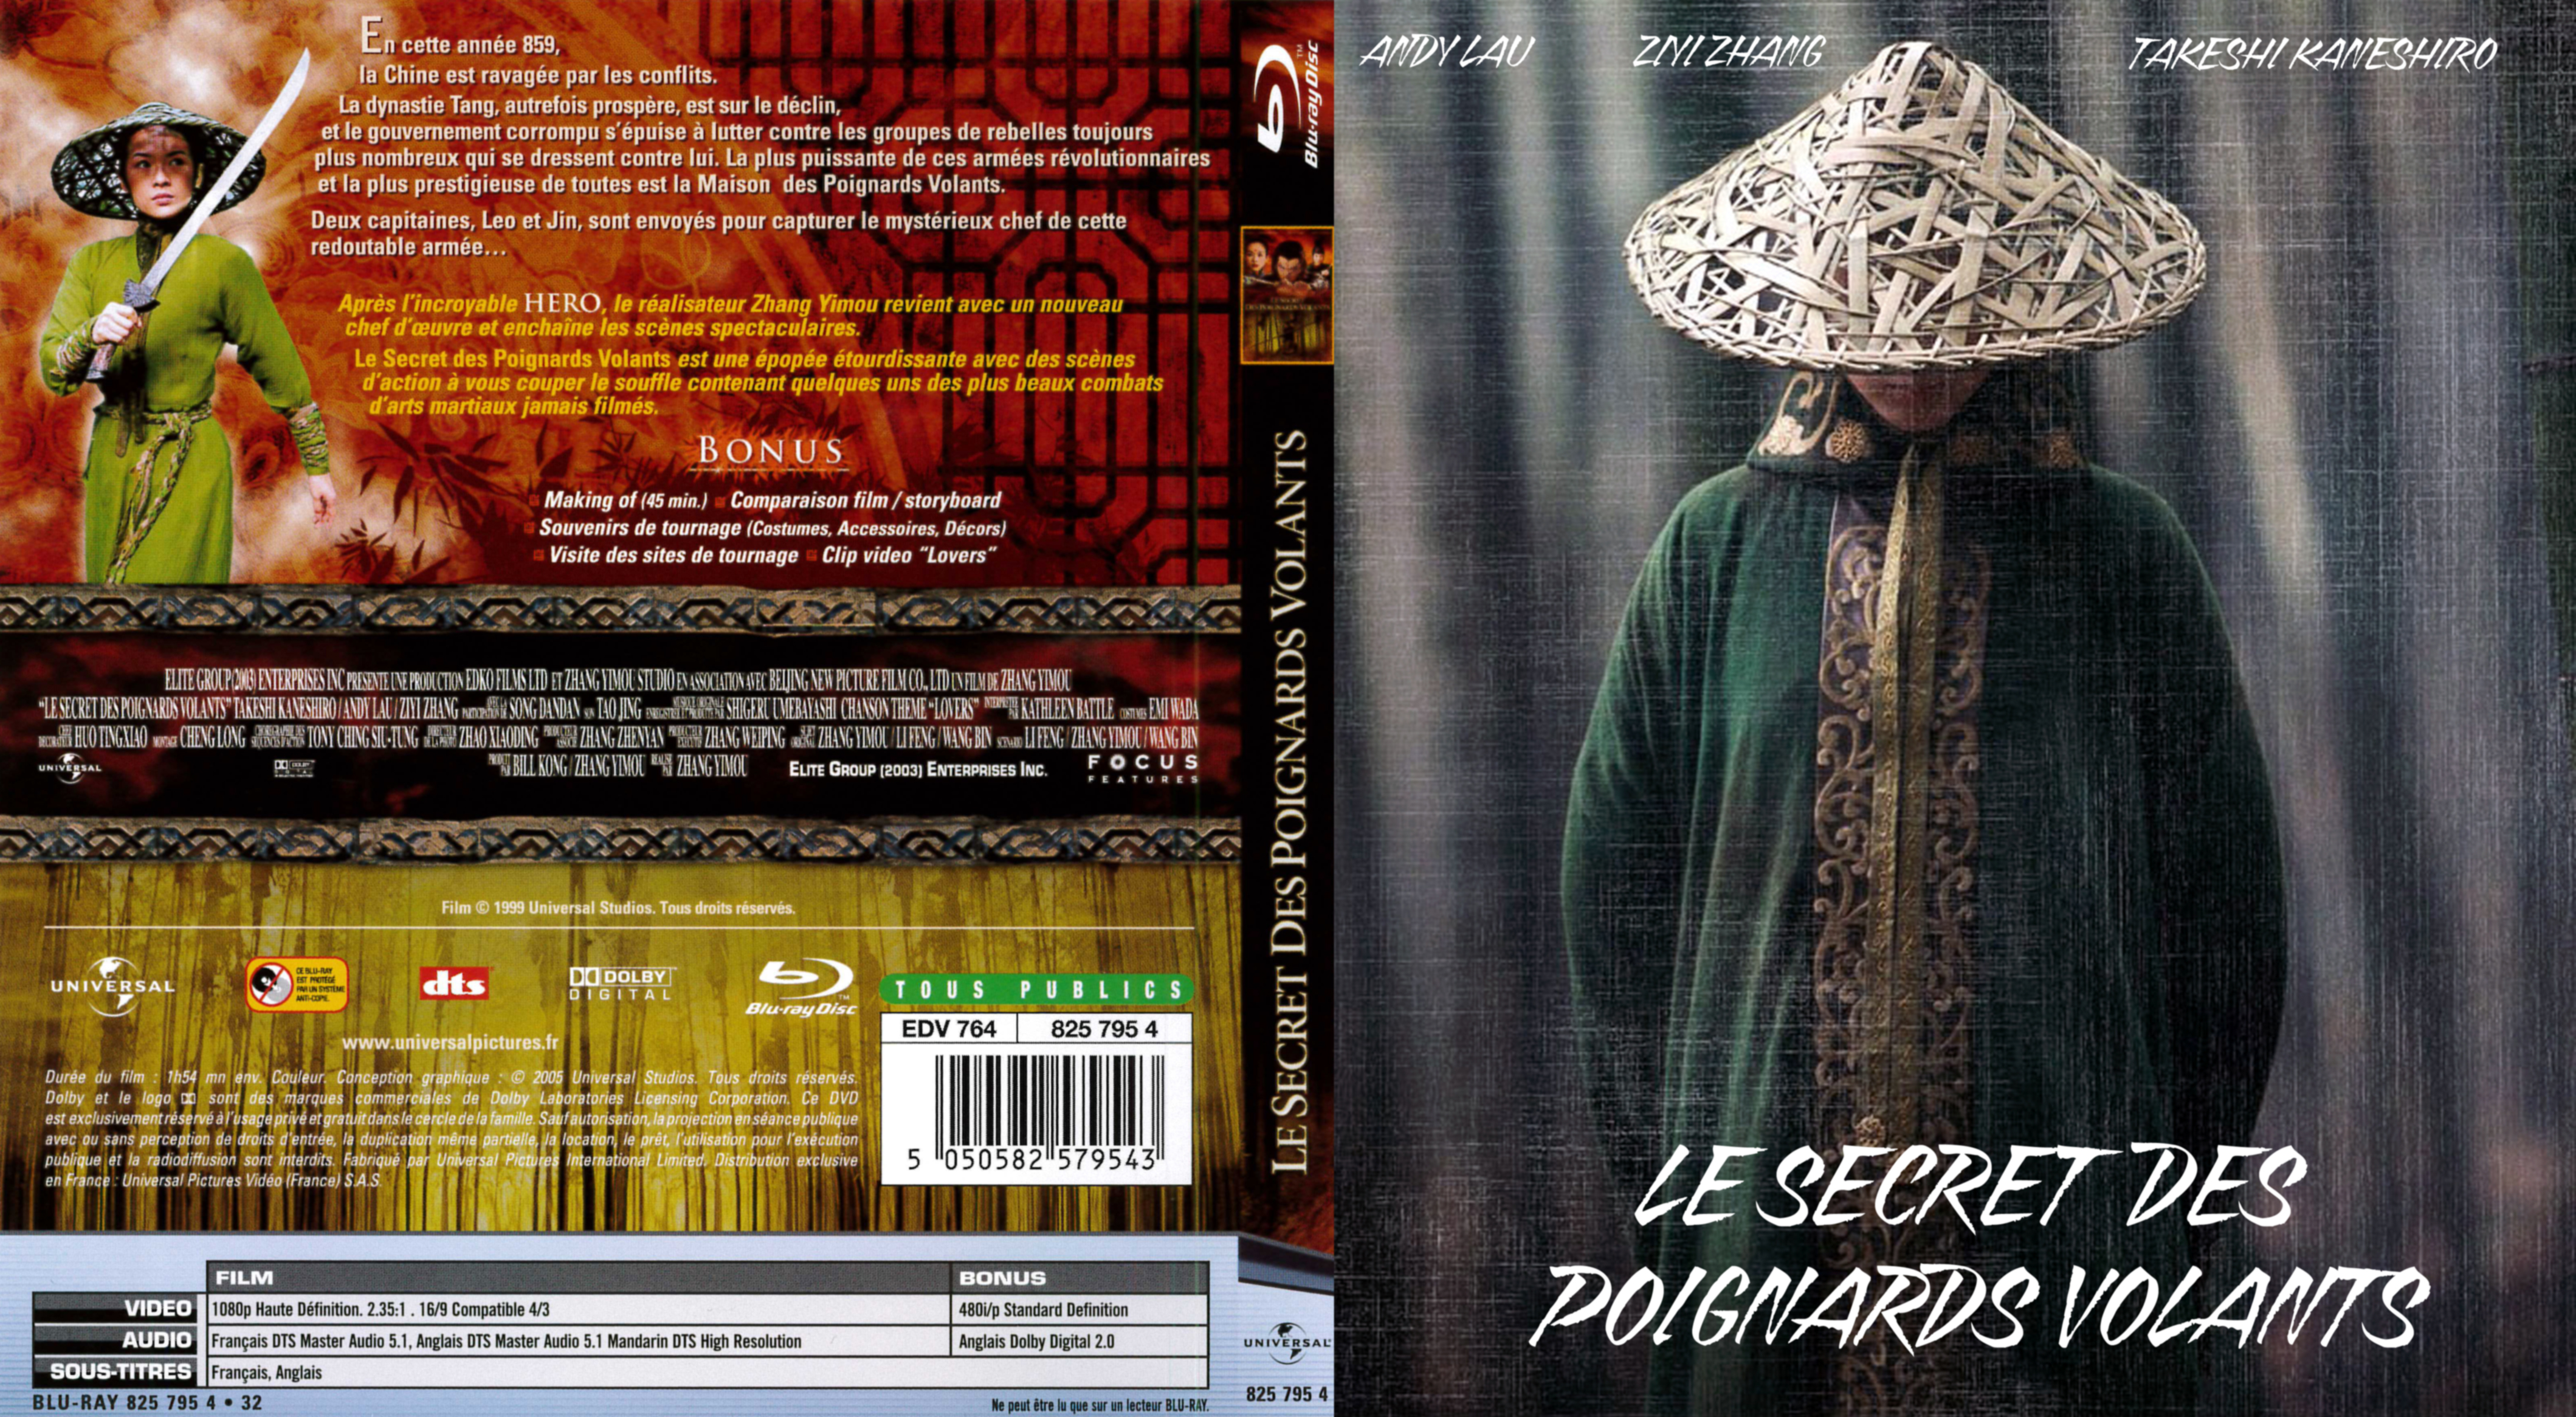 Jaquette DVD Le secret des poignards volant custom (BLU-RAY)